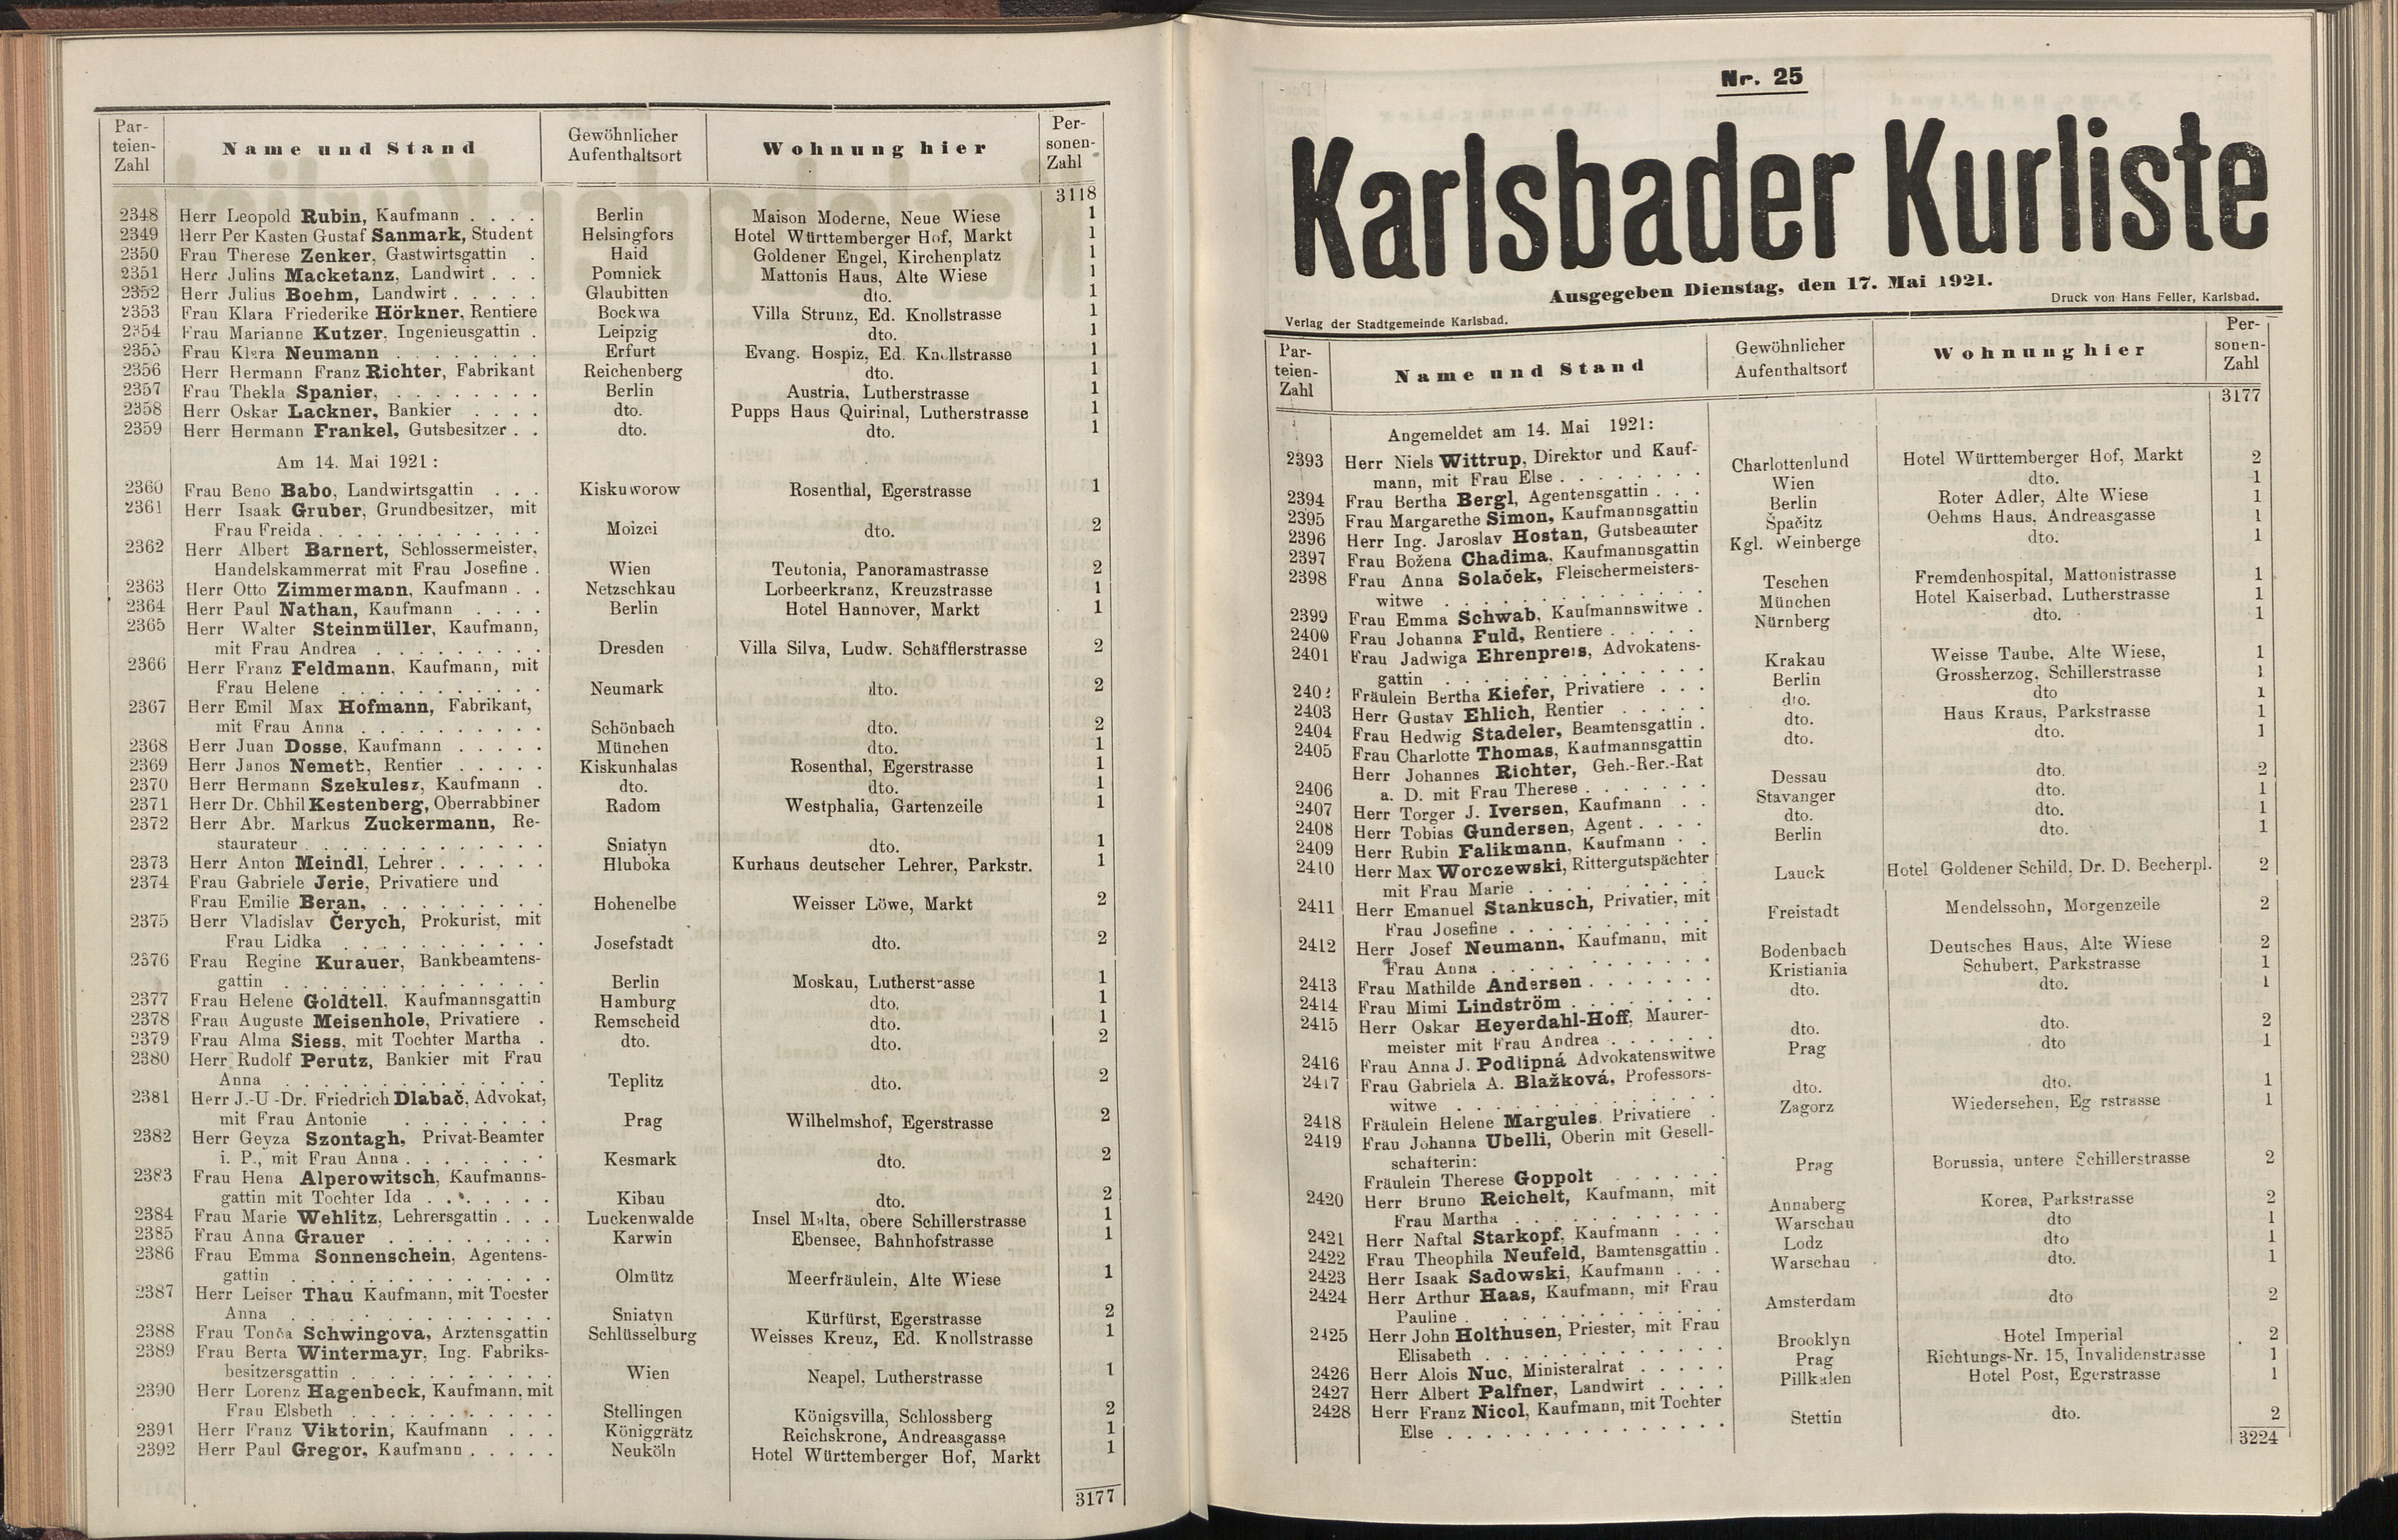 112. soap-kv_knihovna_karlsbader-kurliste-1921_1120